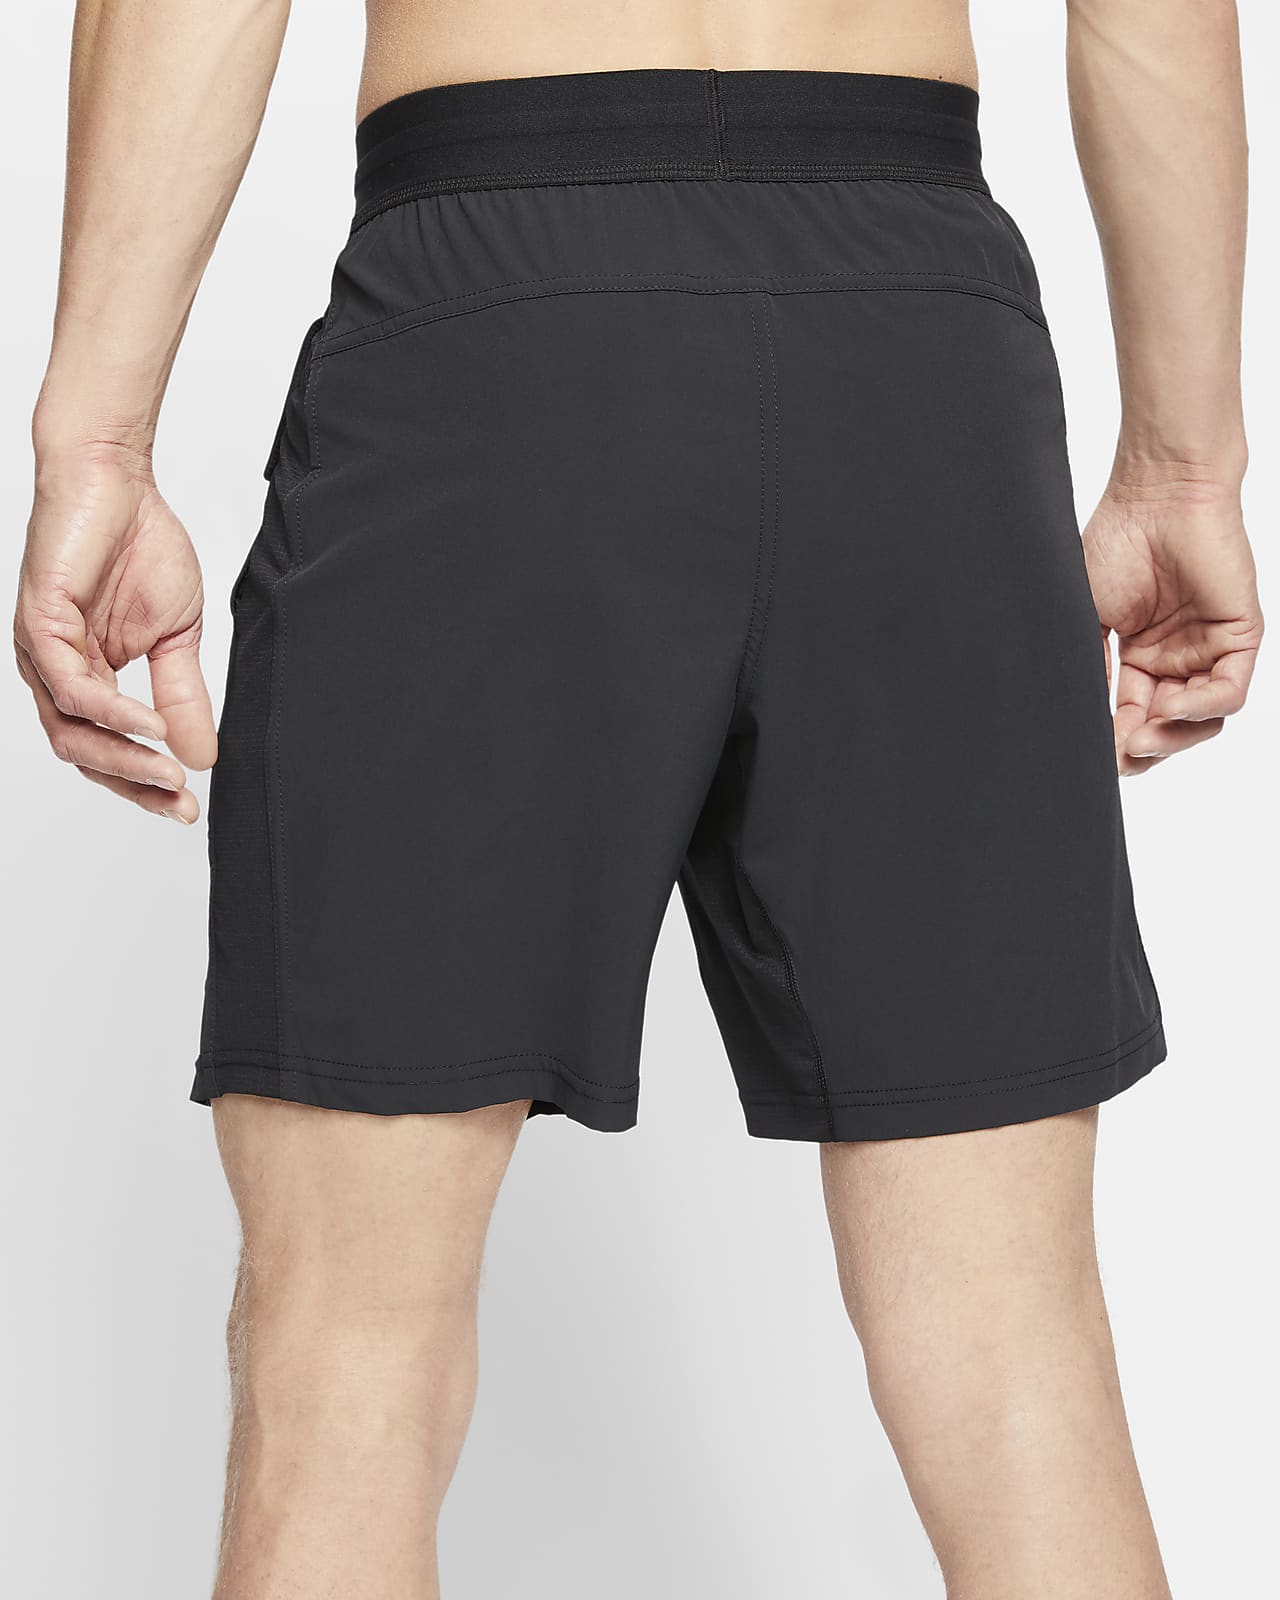 nike men's core flex shorts